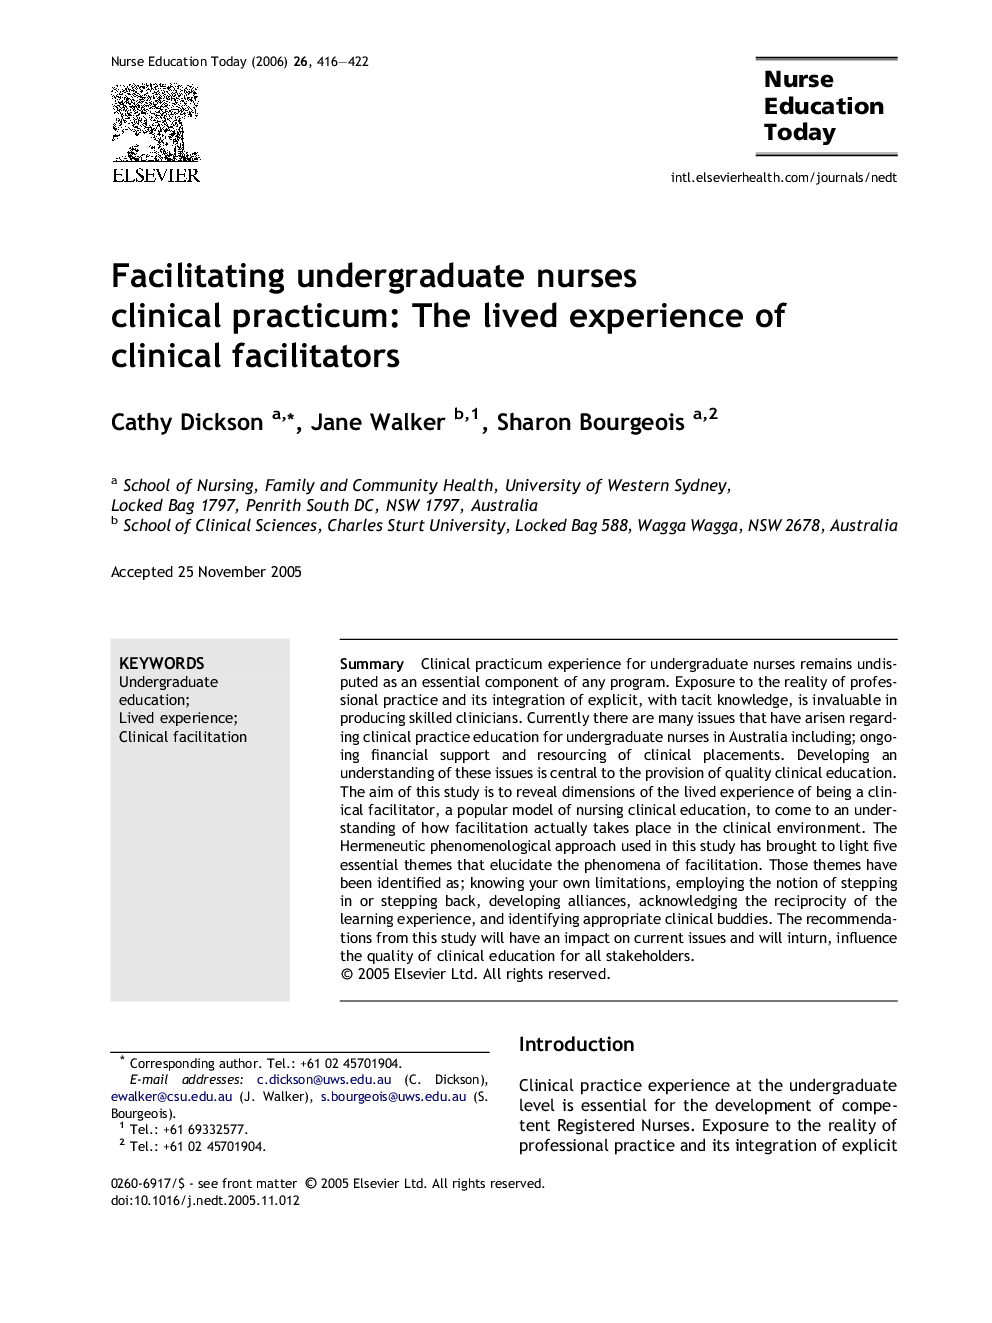 Facilitating undergraduate nurses clinical practicum: The lived experience of clinical facilitators